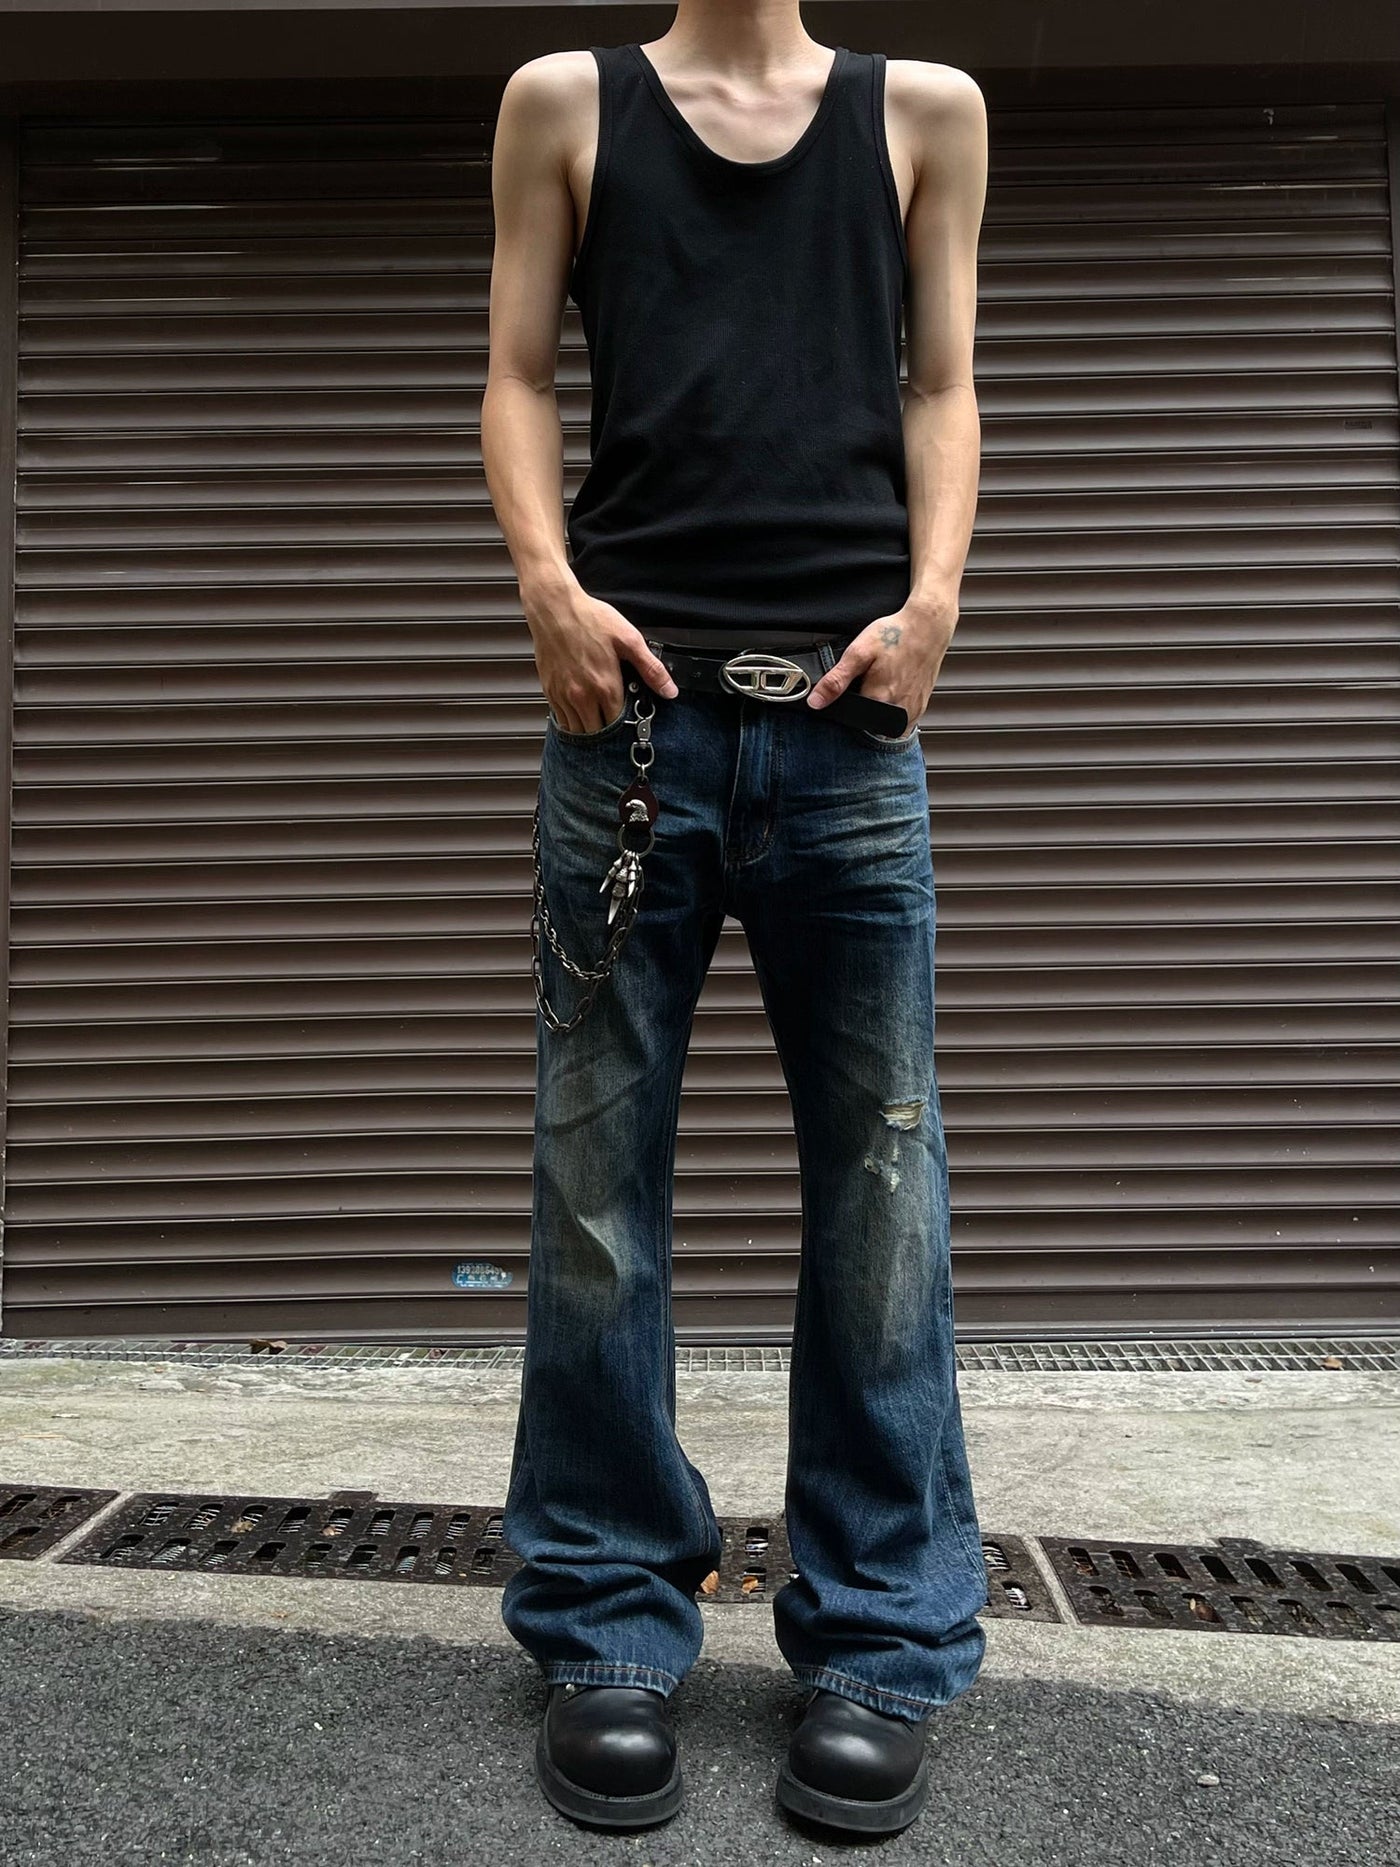 Spliced Blades Track Pants Korean Street Fashion Pants By MaxDstr Shop Online at OH Vault